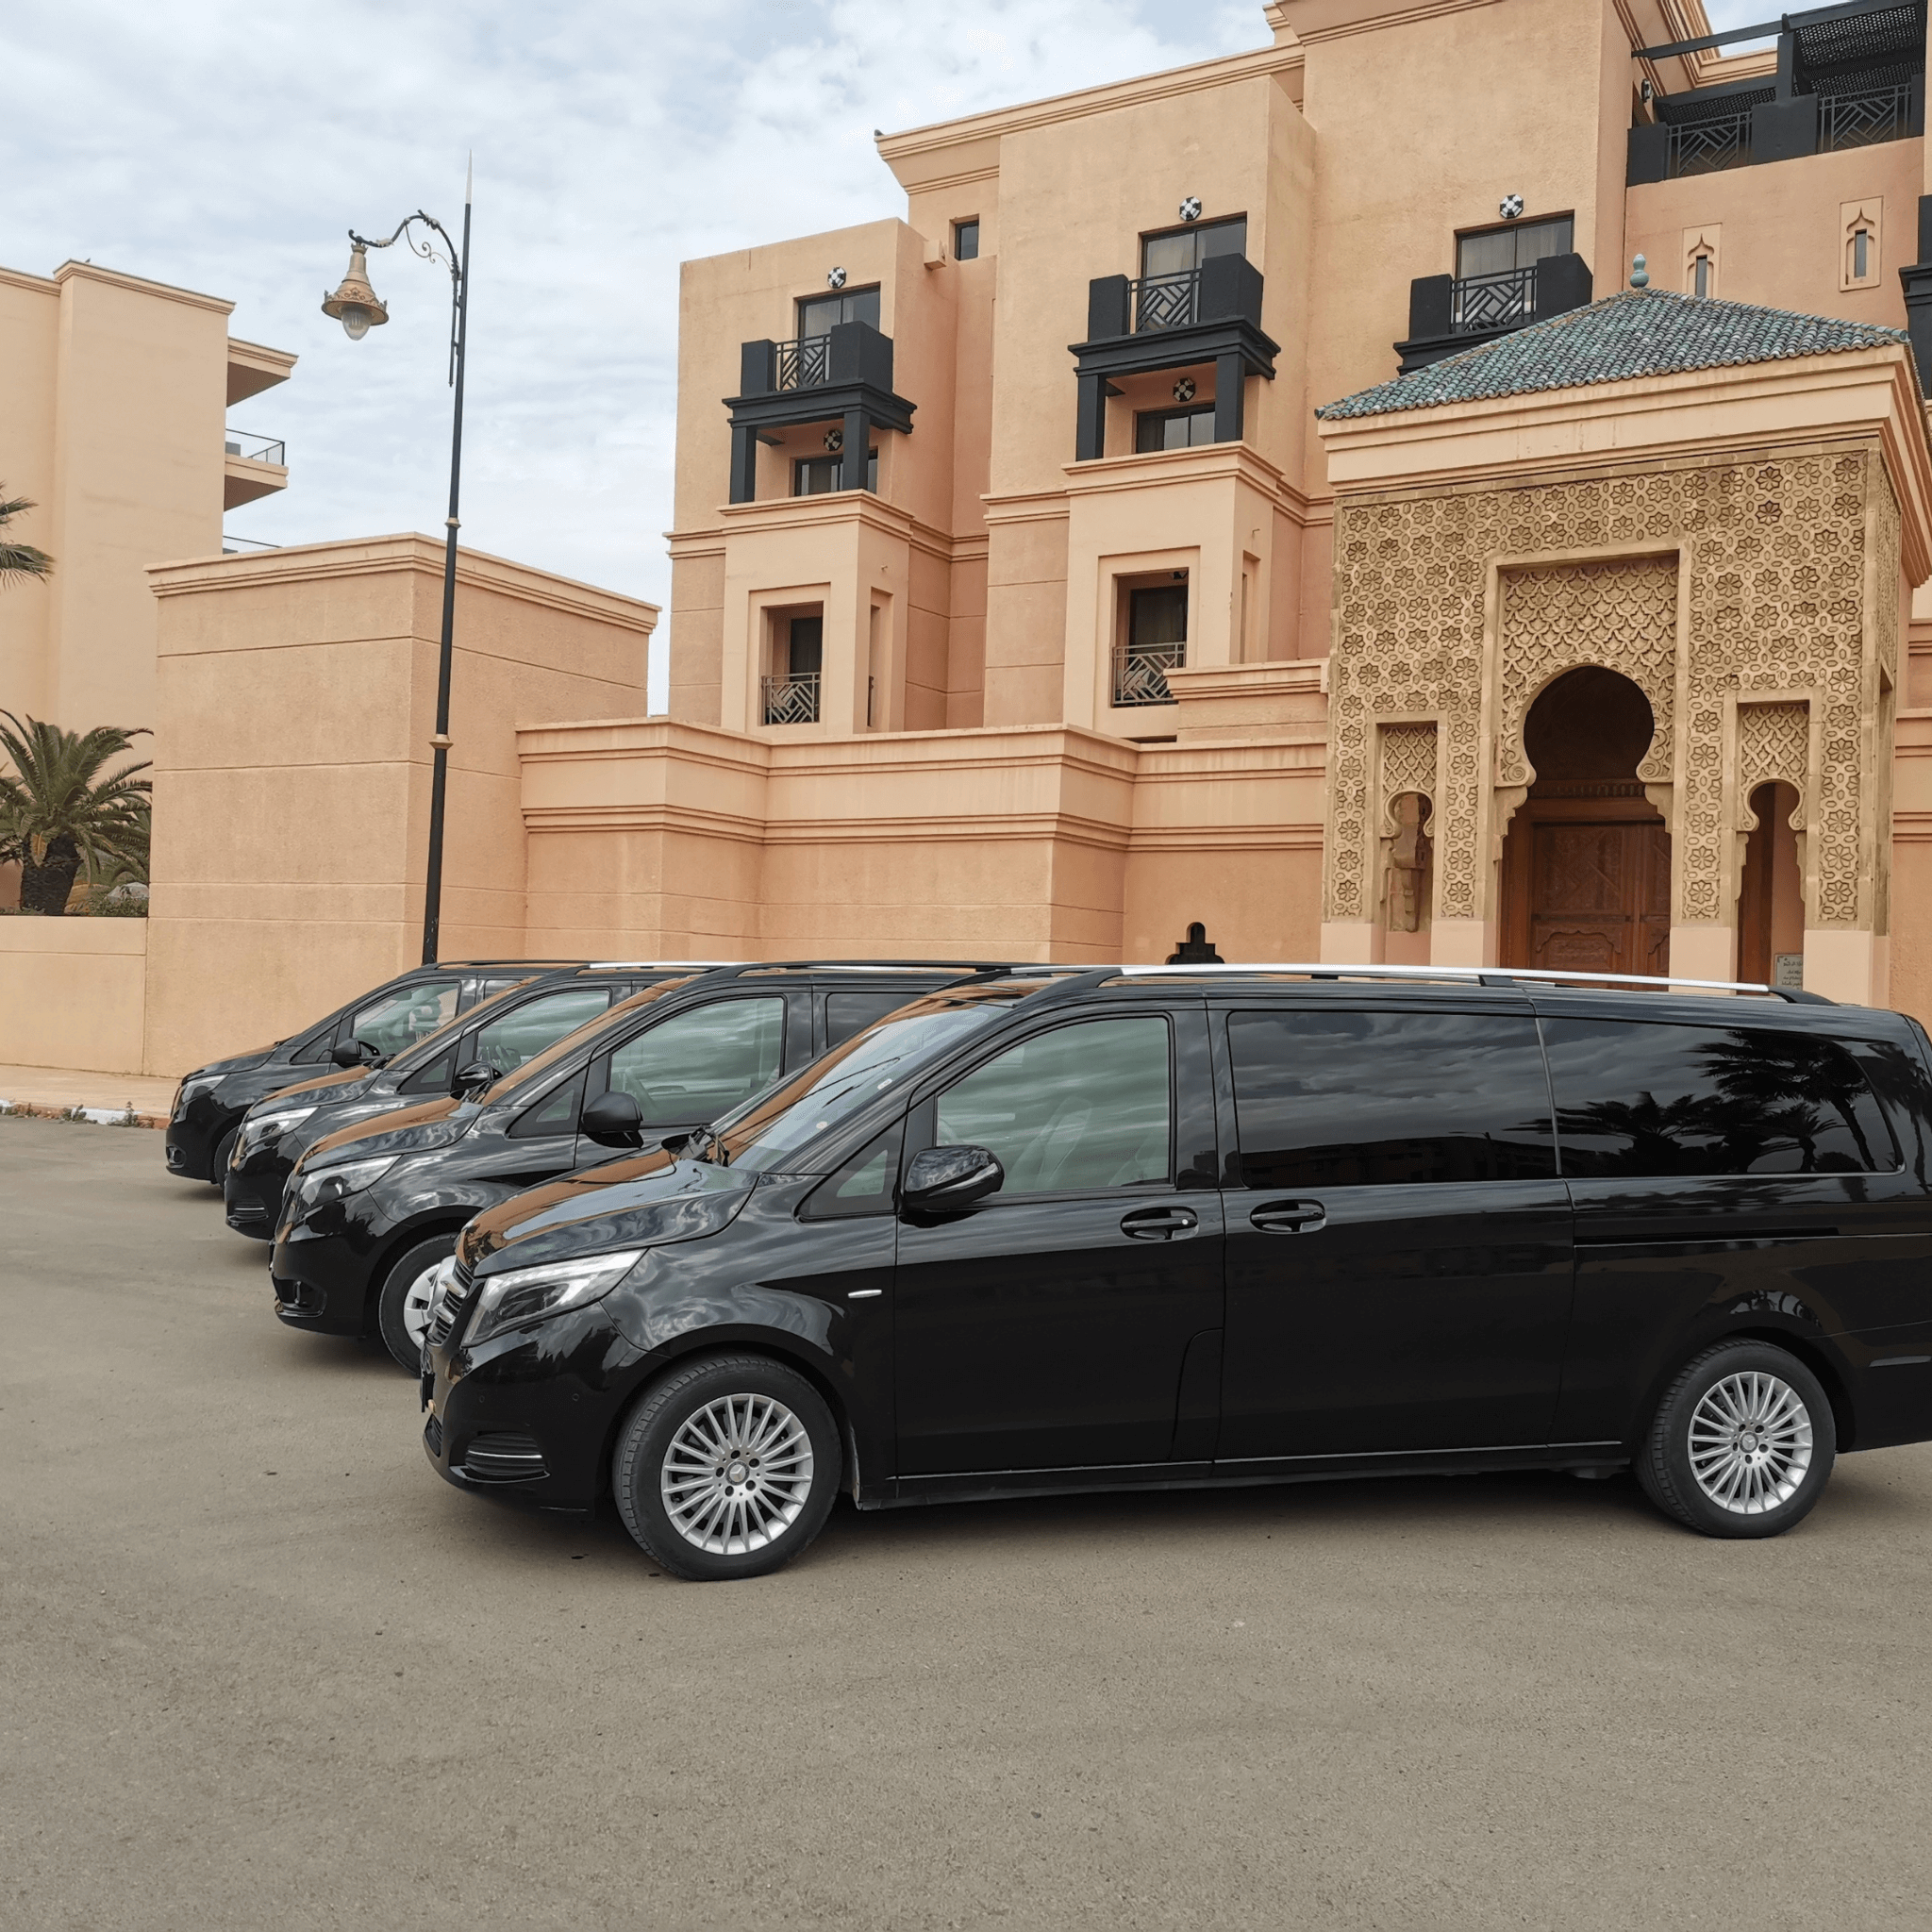 Luxury Transportation in Morocco